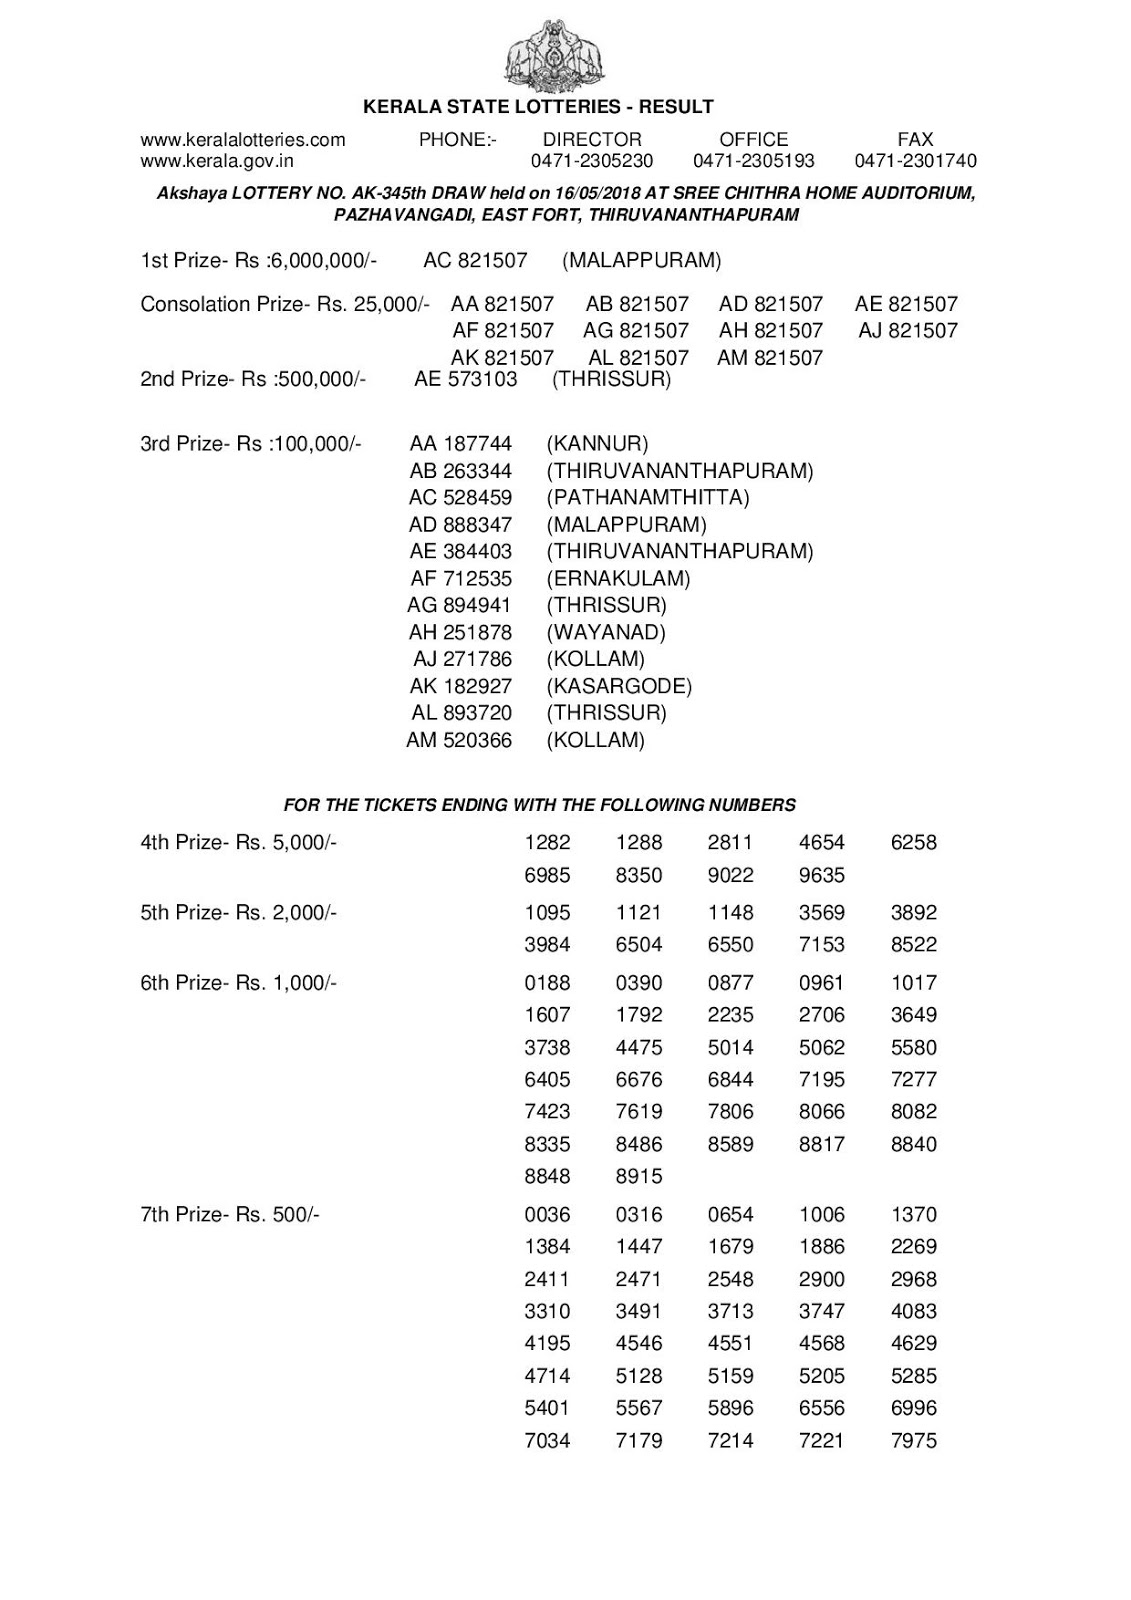 Kerala Lottery Results Today 16.05.2018 Akshaya AK-345 Lottery Results Official PDF